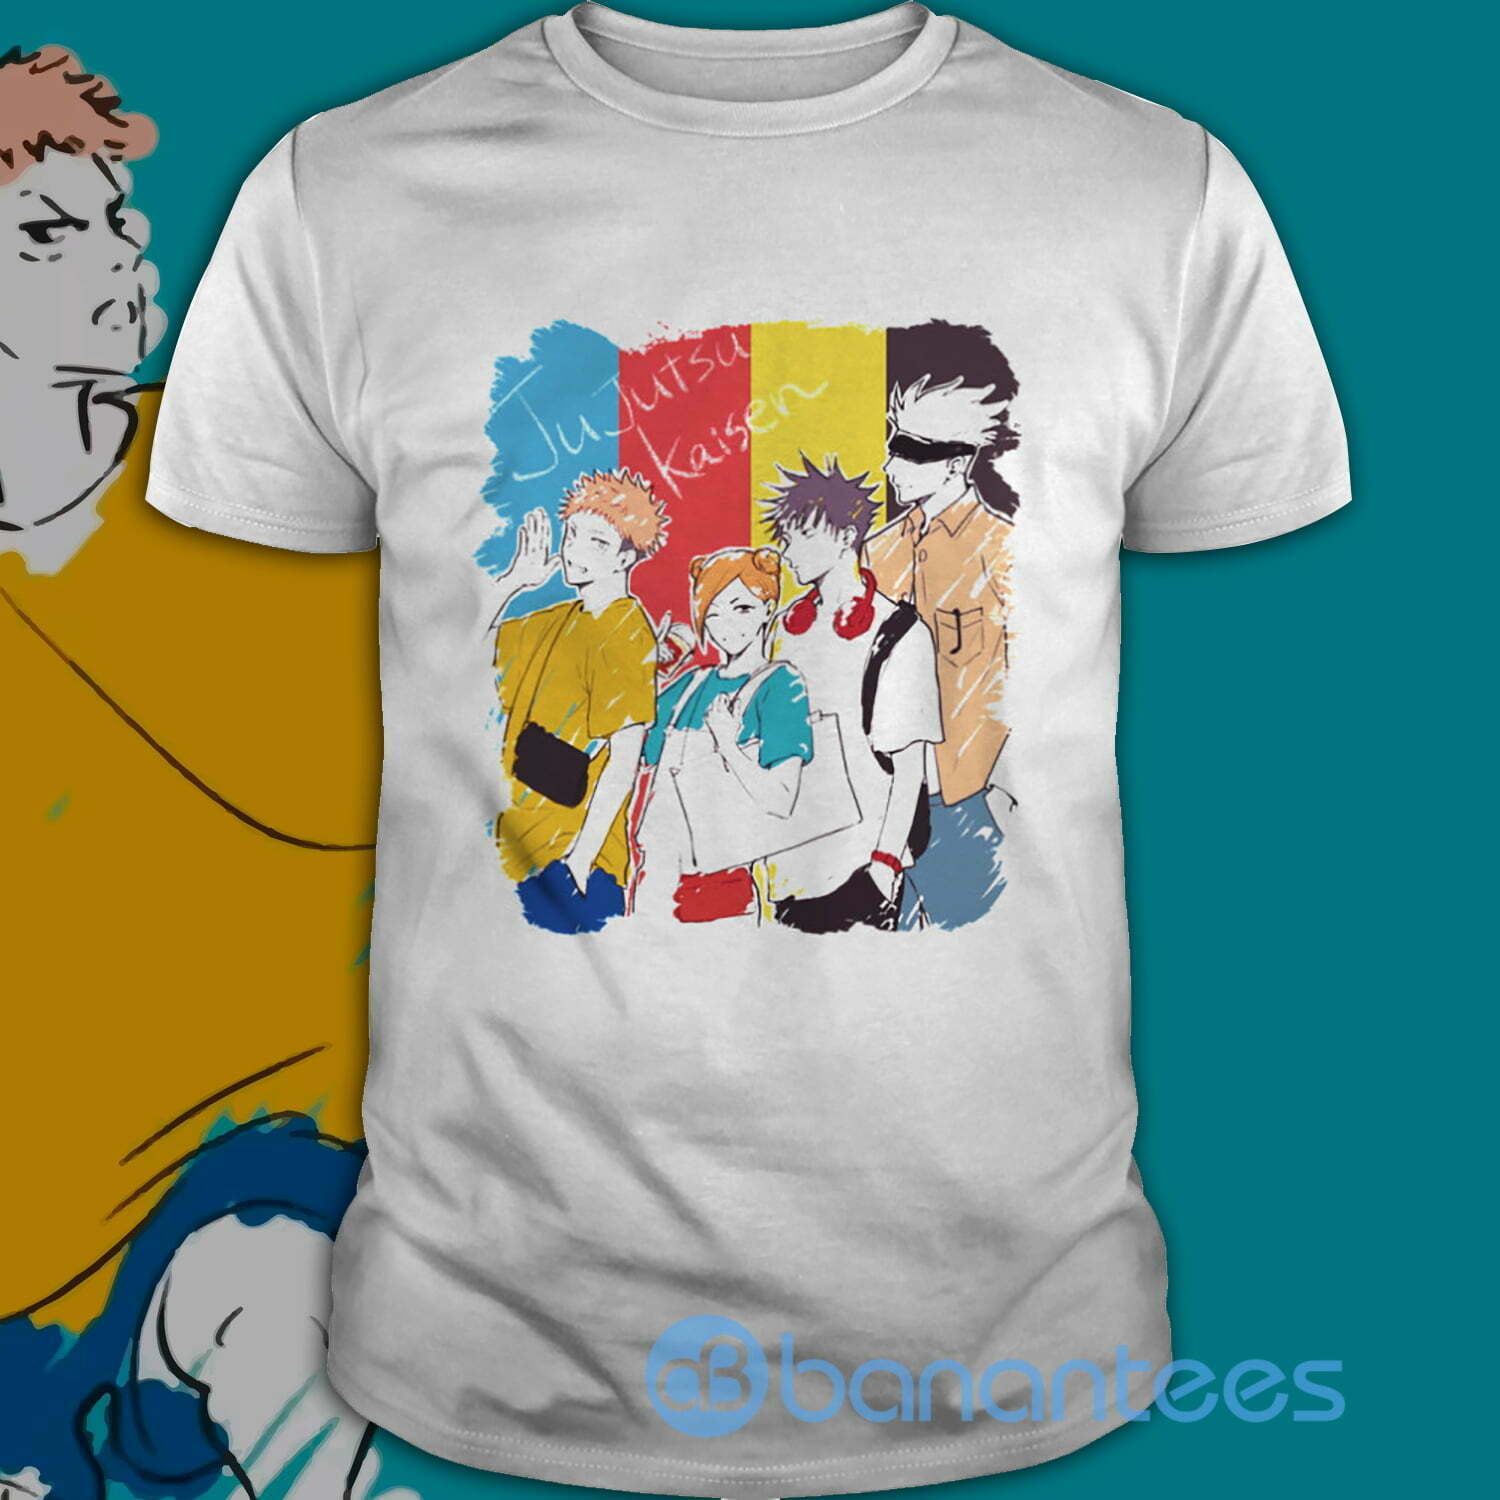 T-Shirt Printed With Anime Jujutsu Kaisen Battle Spells